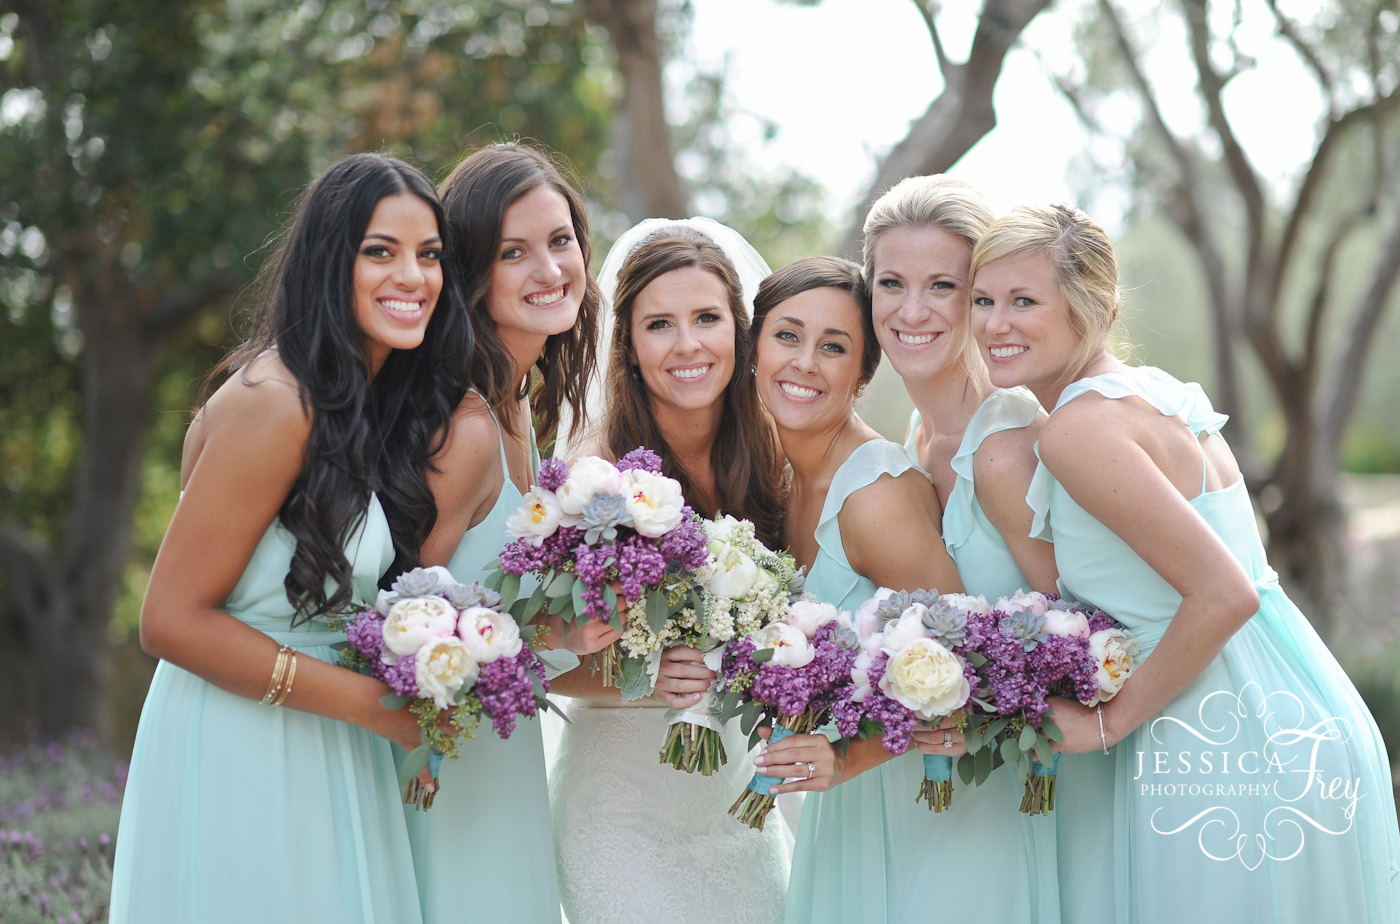 Cornflower Blue Bridesmaid Dresses